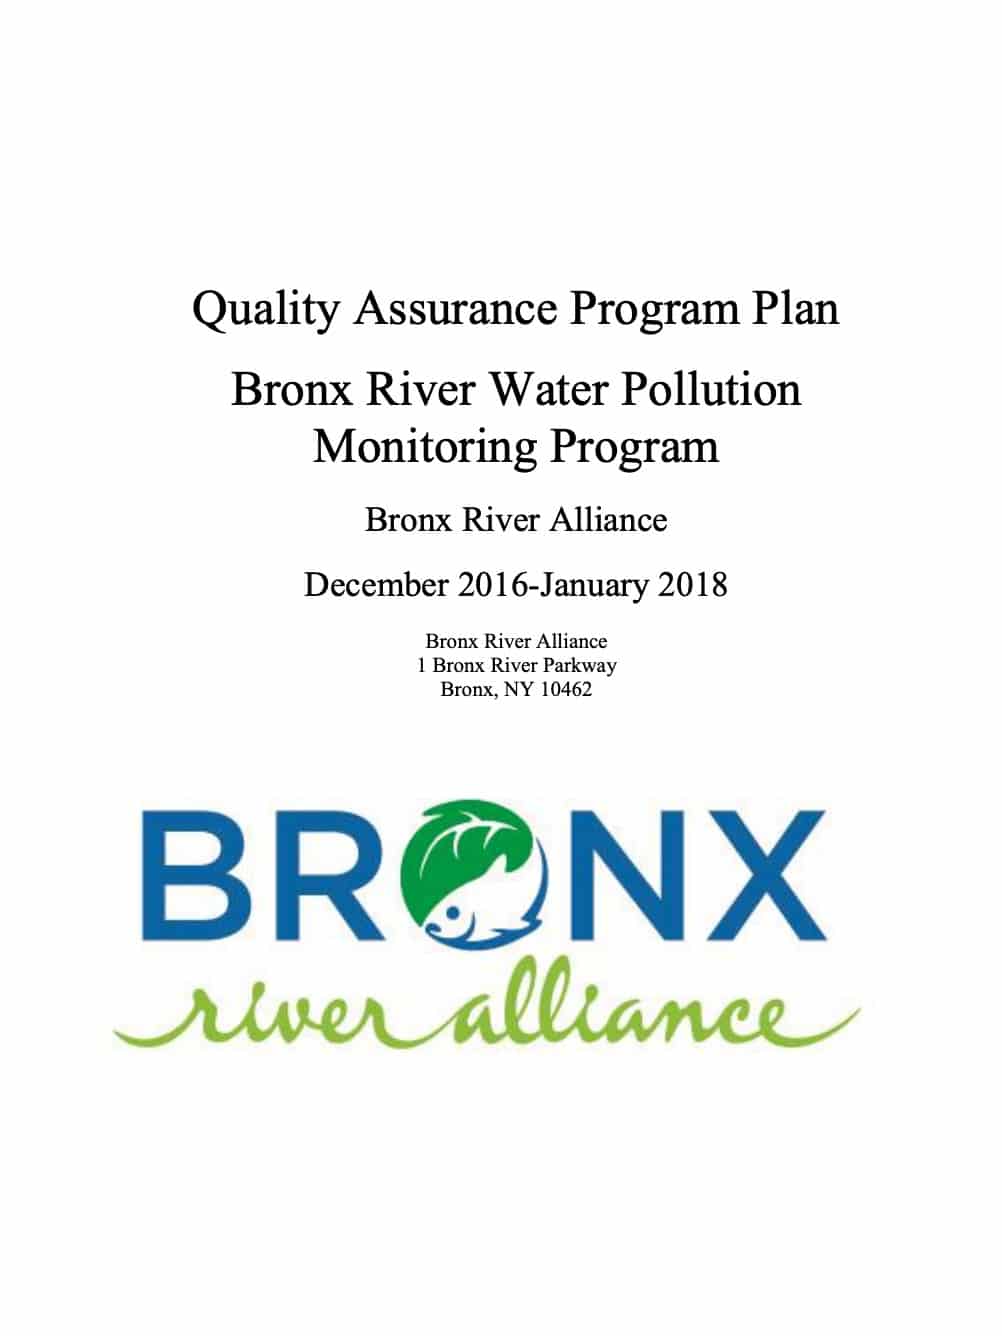 Quality Assurance Program Plan: Bronx River Water Pollution Monitoring Program